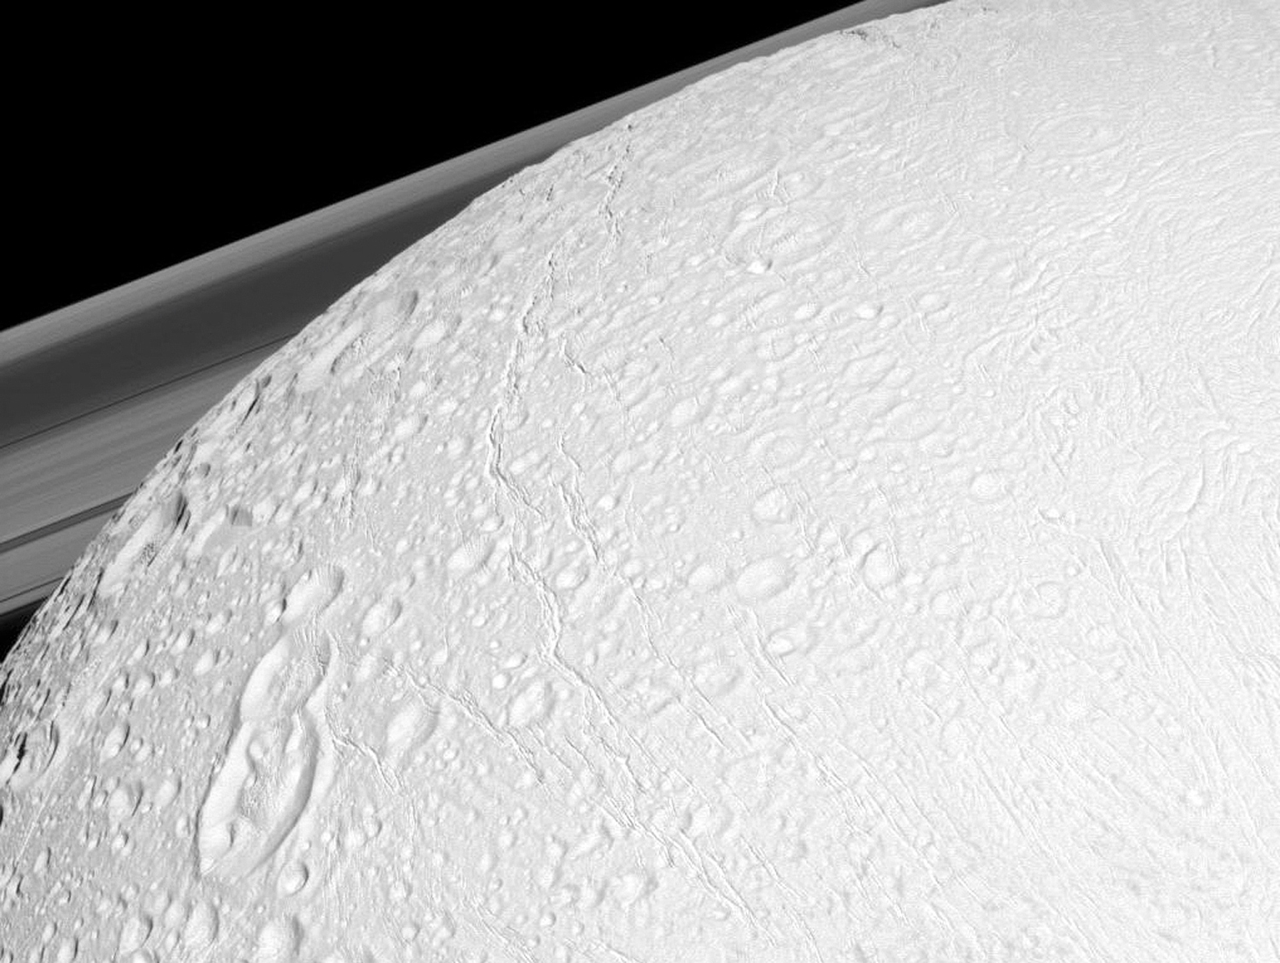 Enceladus, Saturn's Amazing Snowball Moon 04